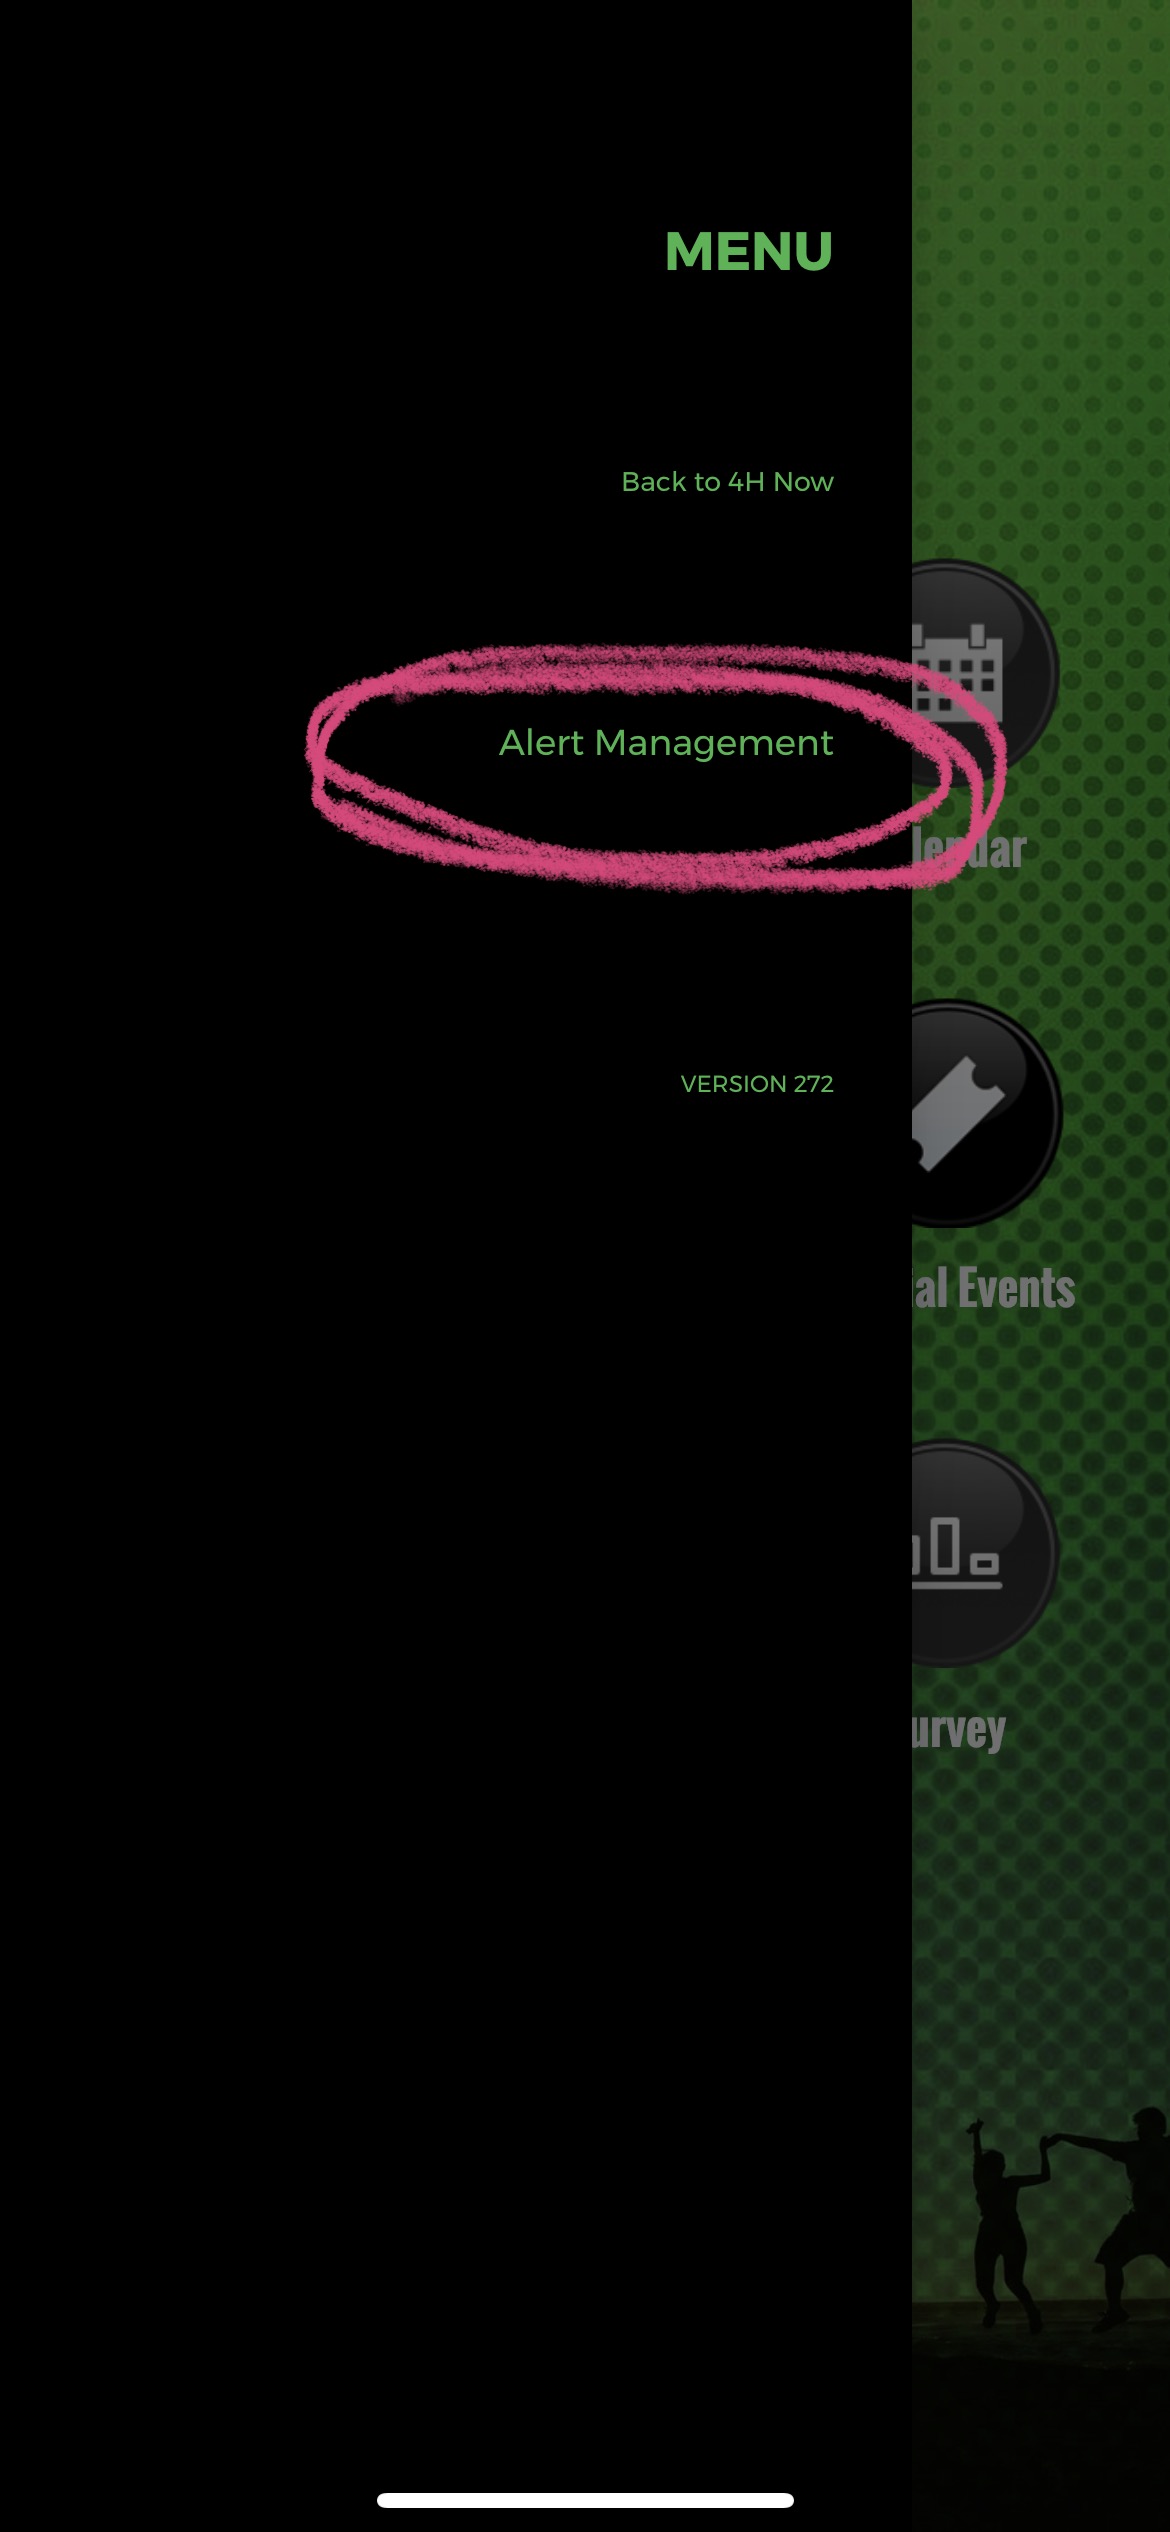 Location of "Alert Management" menu item circled